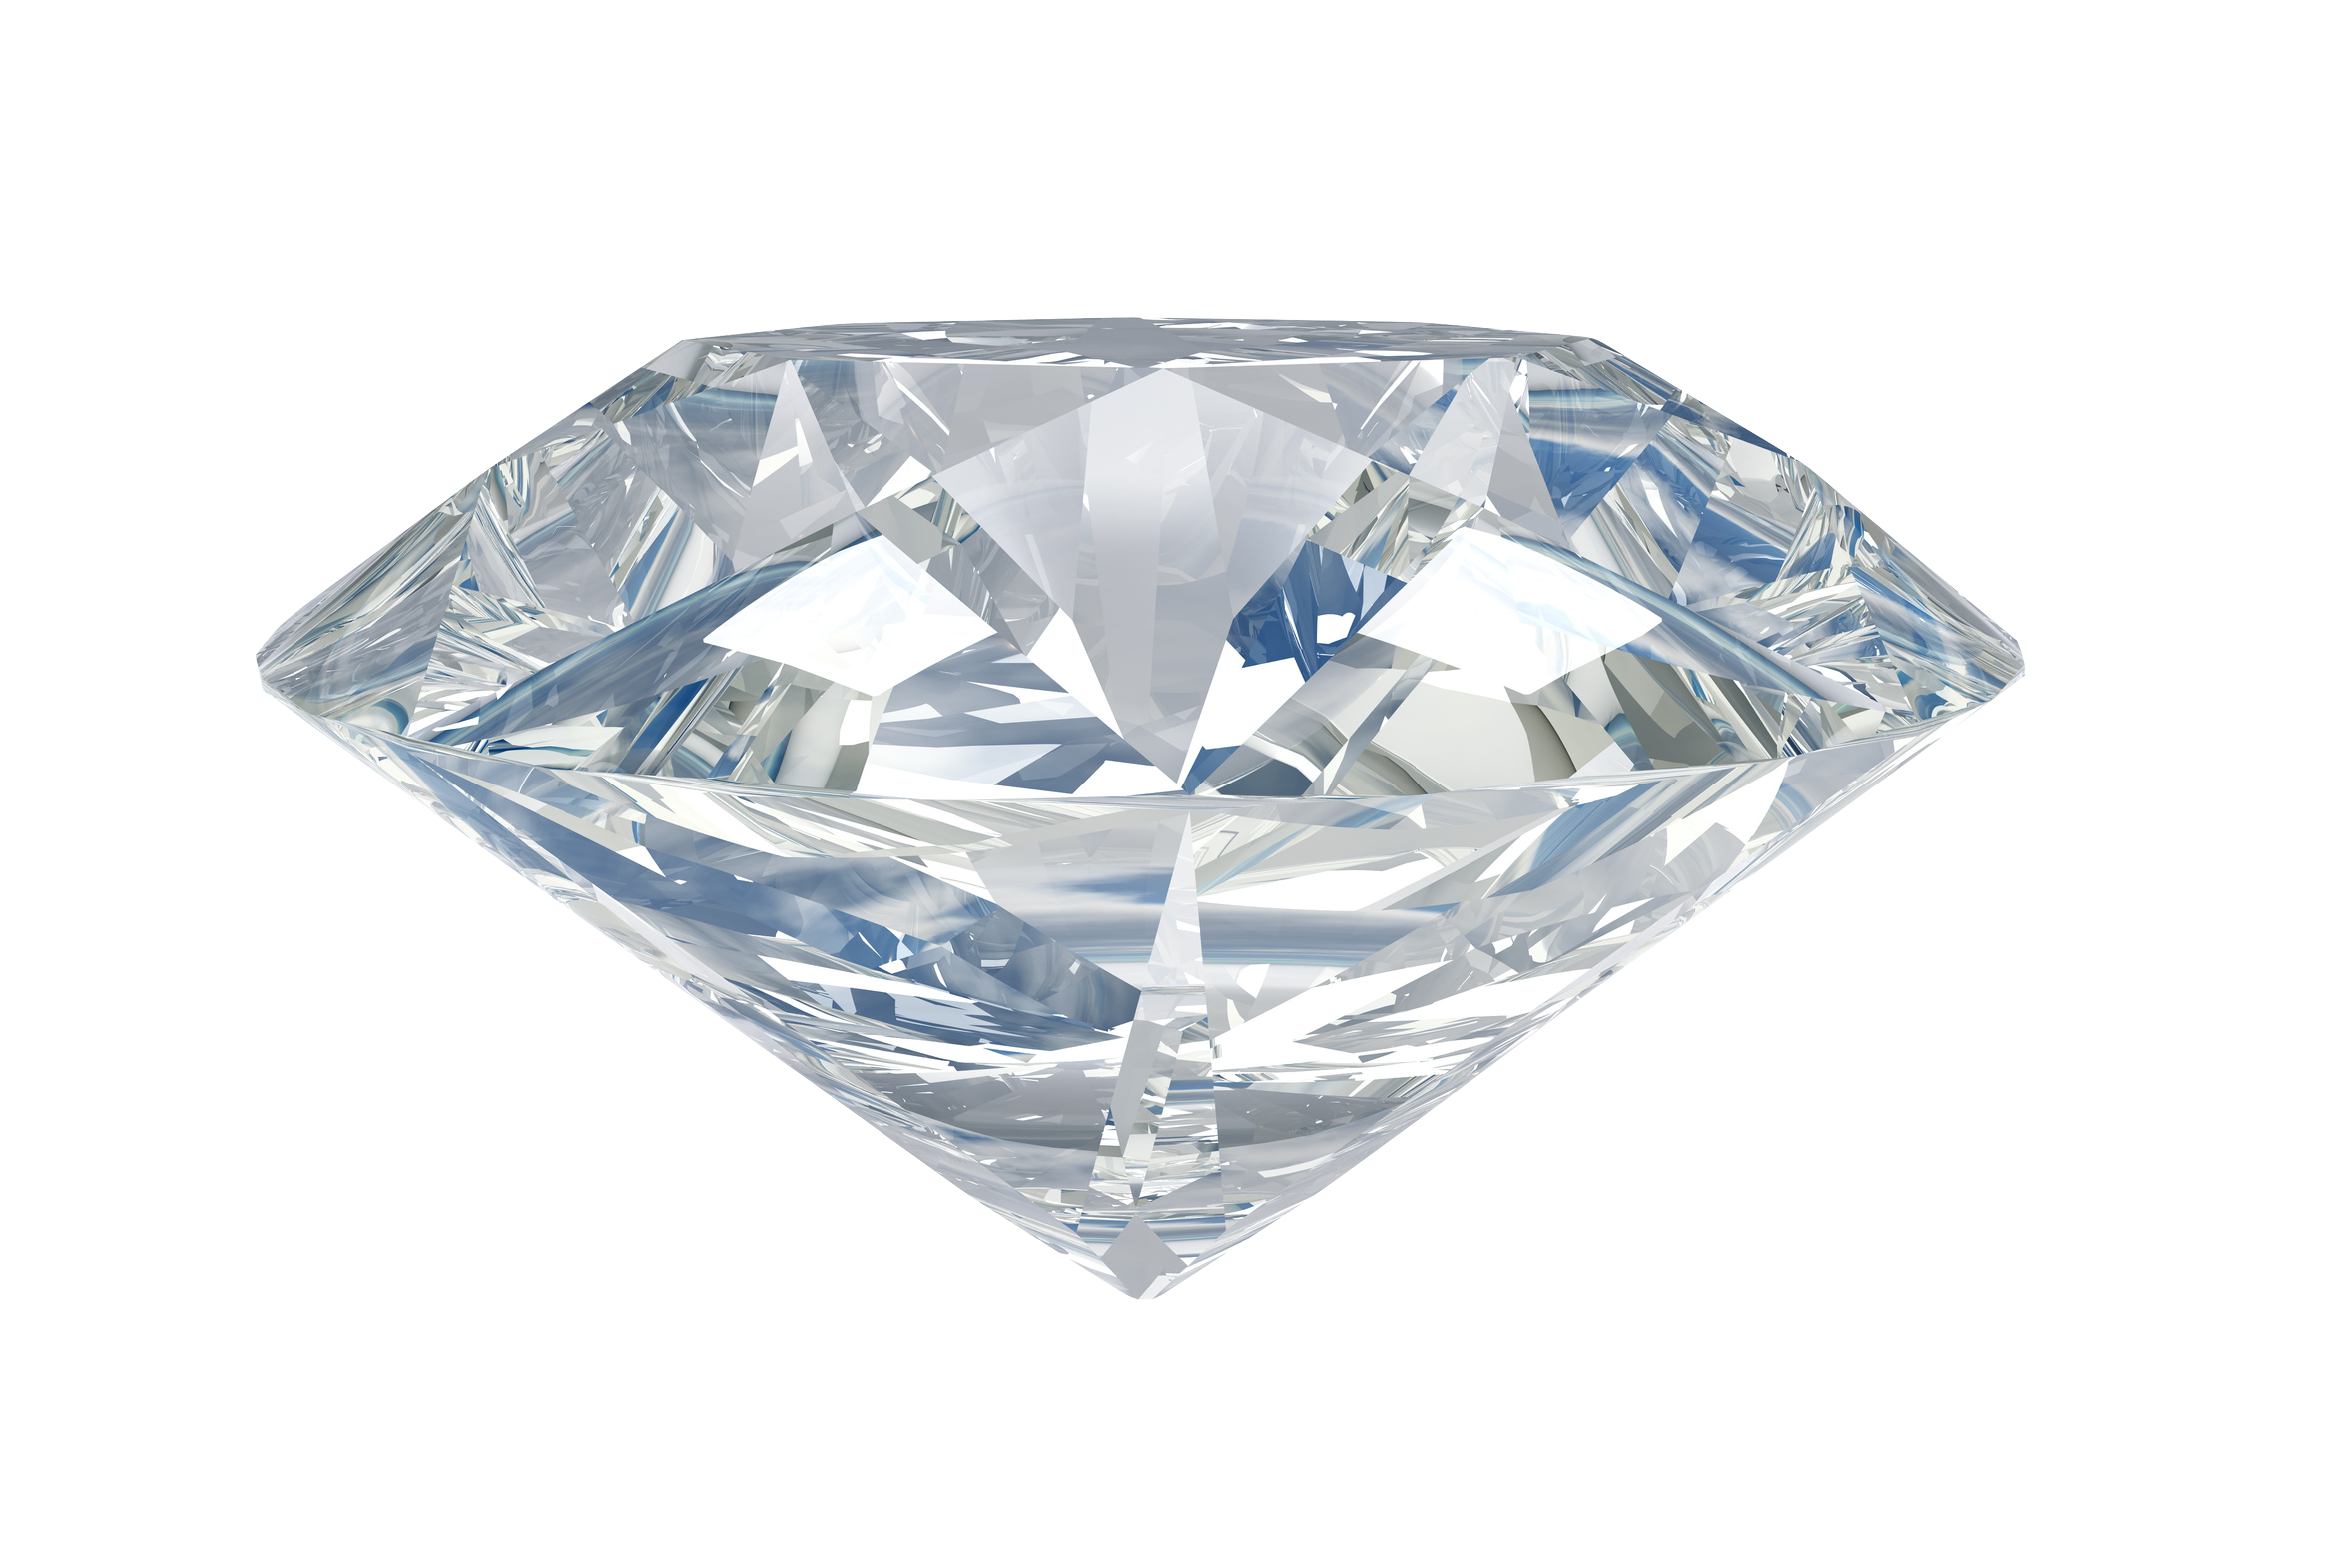 Diamond Render PNG